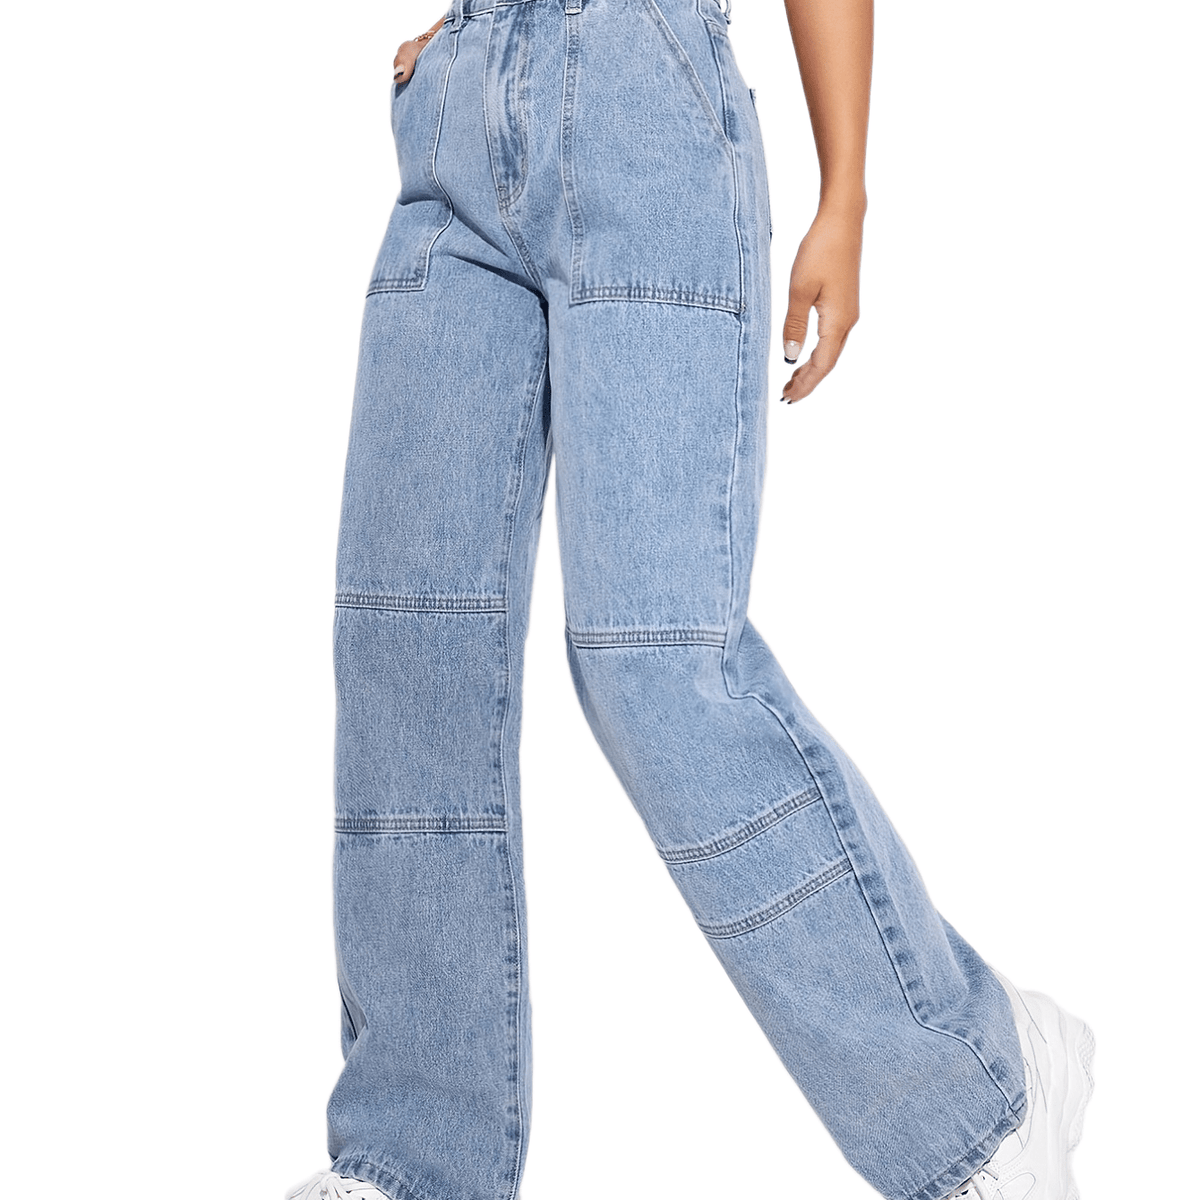 「lovevop」Blue Loose Fit Straight Jeans, Slash Pockets Non-Stretch Baggy Denim Pants, Women's Denim Jeans & Clothing